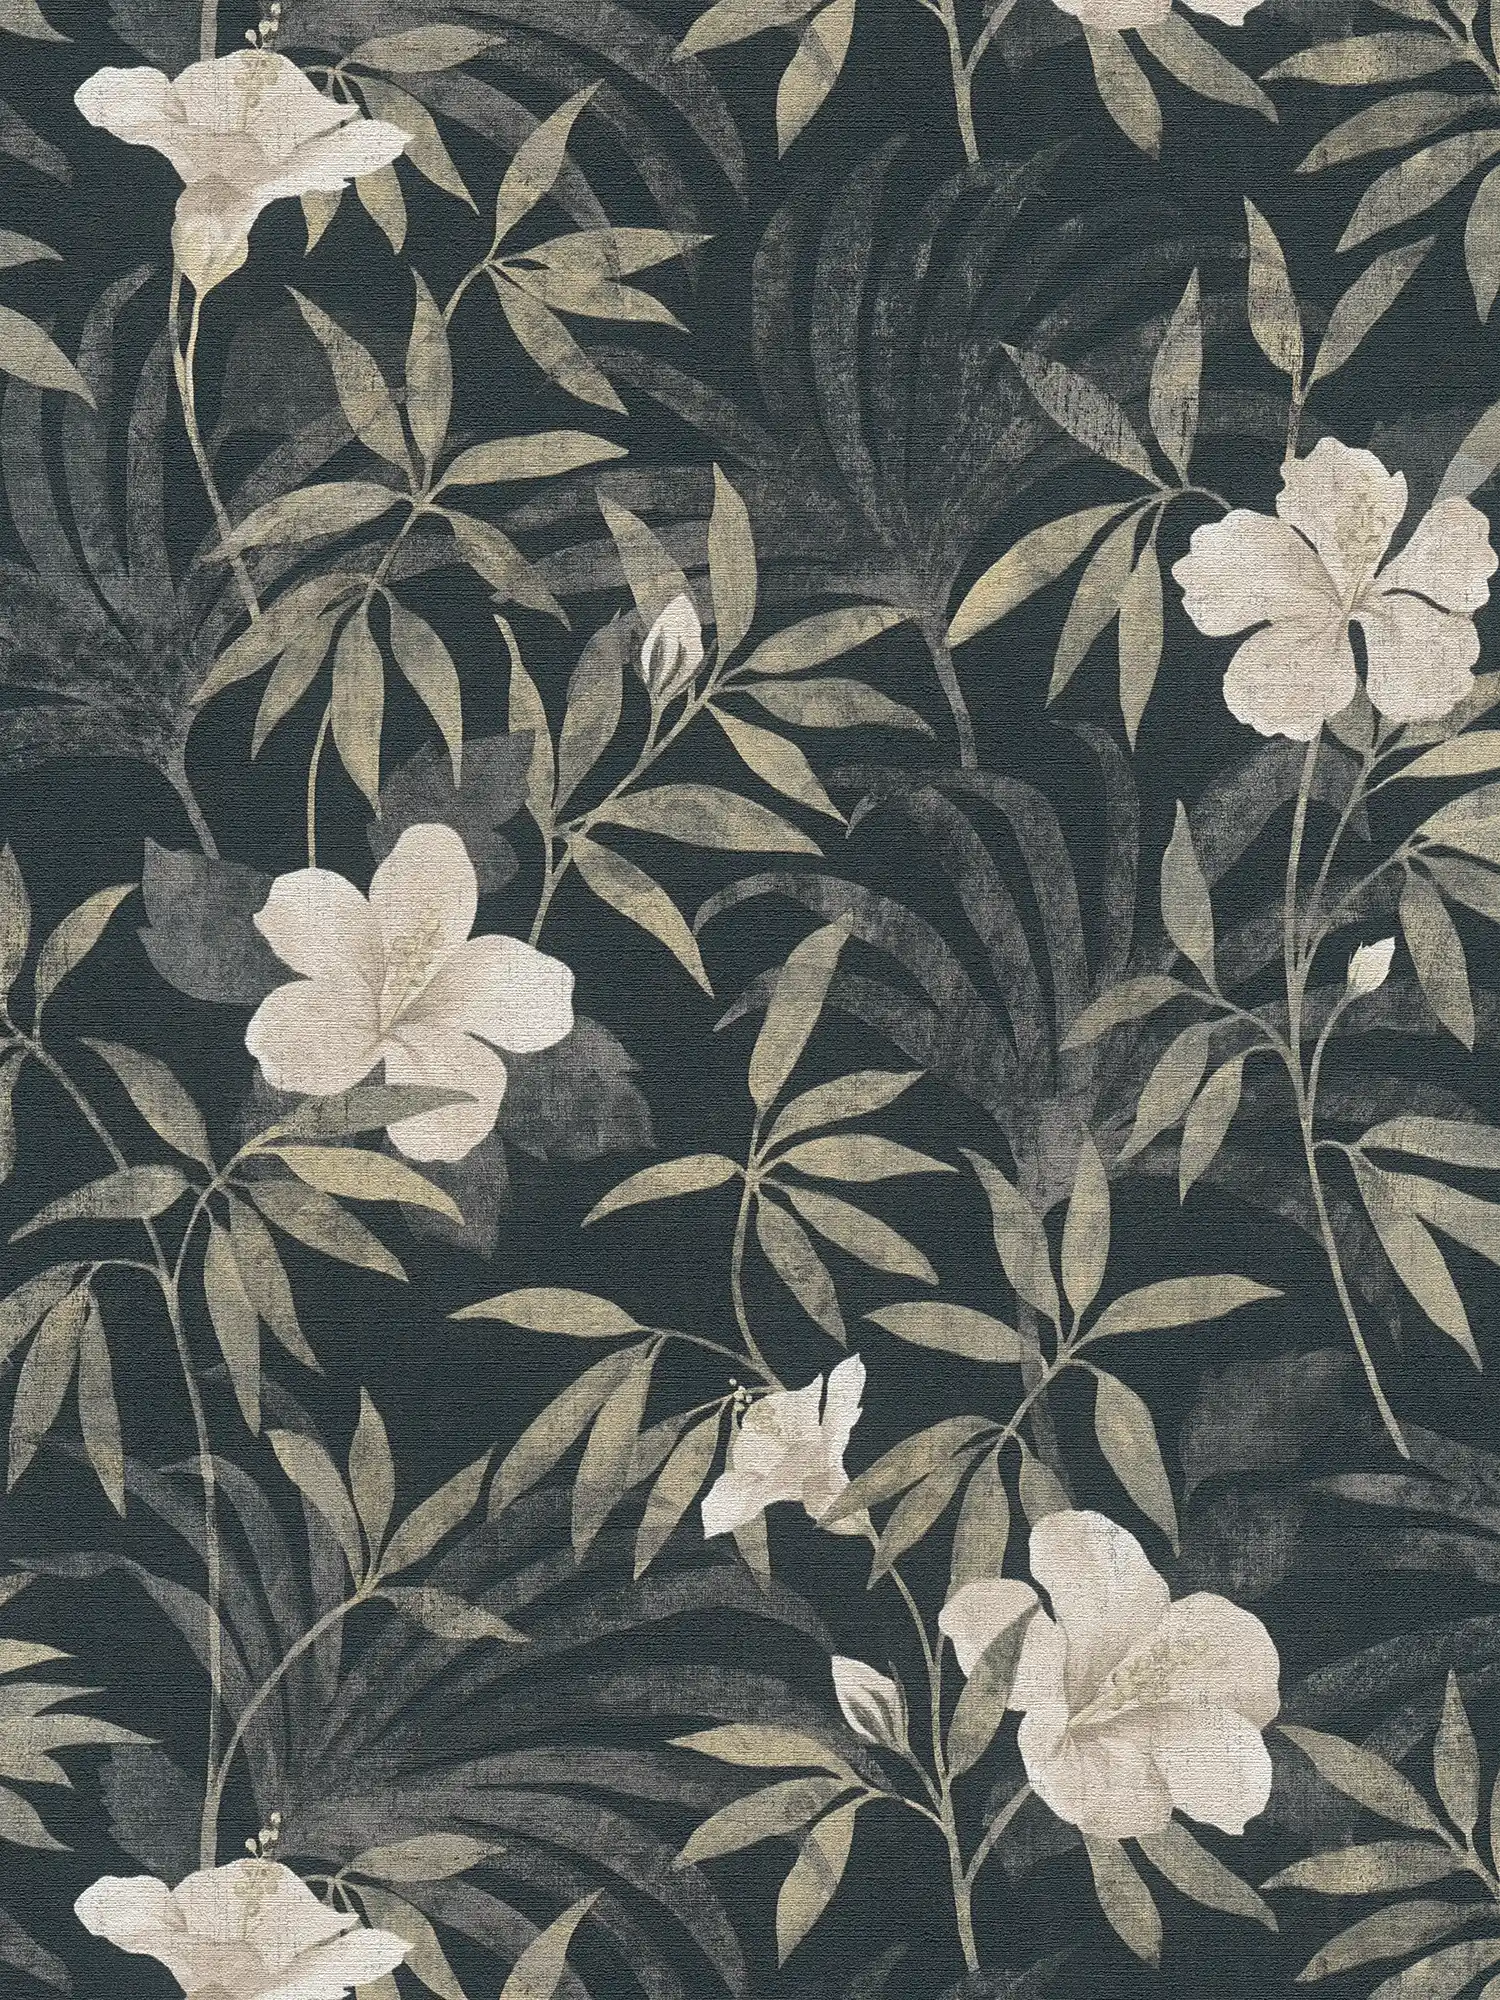 Jungle wallpaper retro pattern with tropical design - brown, grey, black
